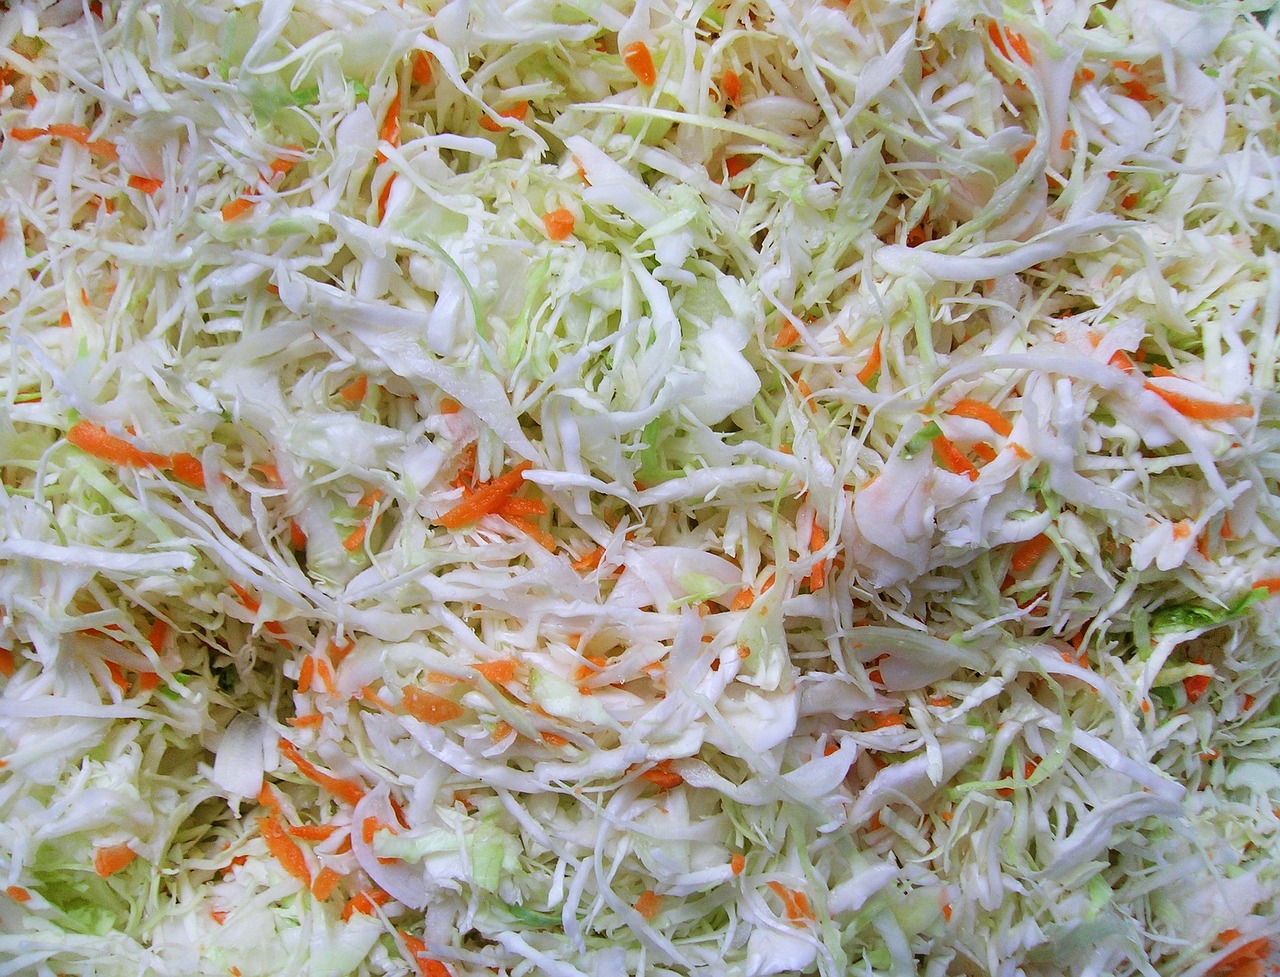 a close up of a salad with carrots and cabbage, hurufiyya, high quality product image”, siberia!!, very crispy, yoshida